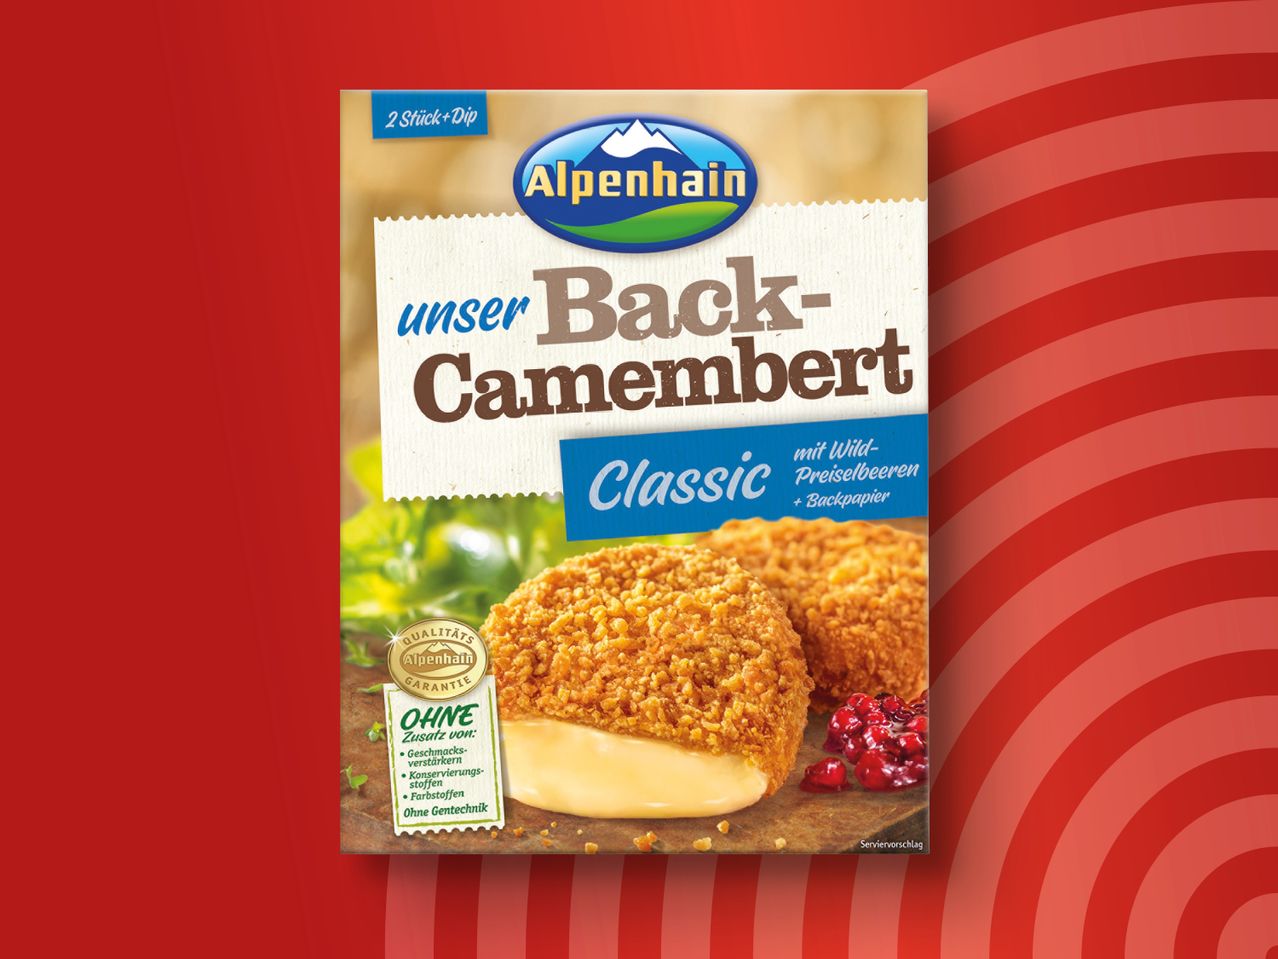 Alpenhain Back-Camembert/-Mozzarella Sticks